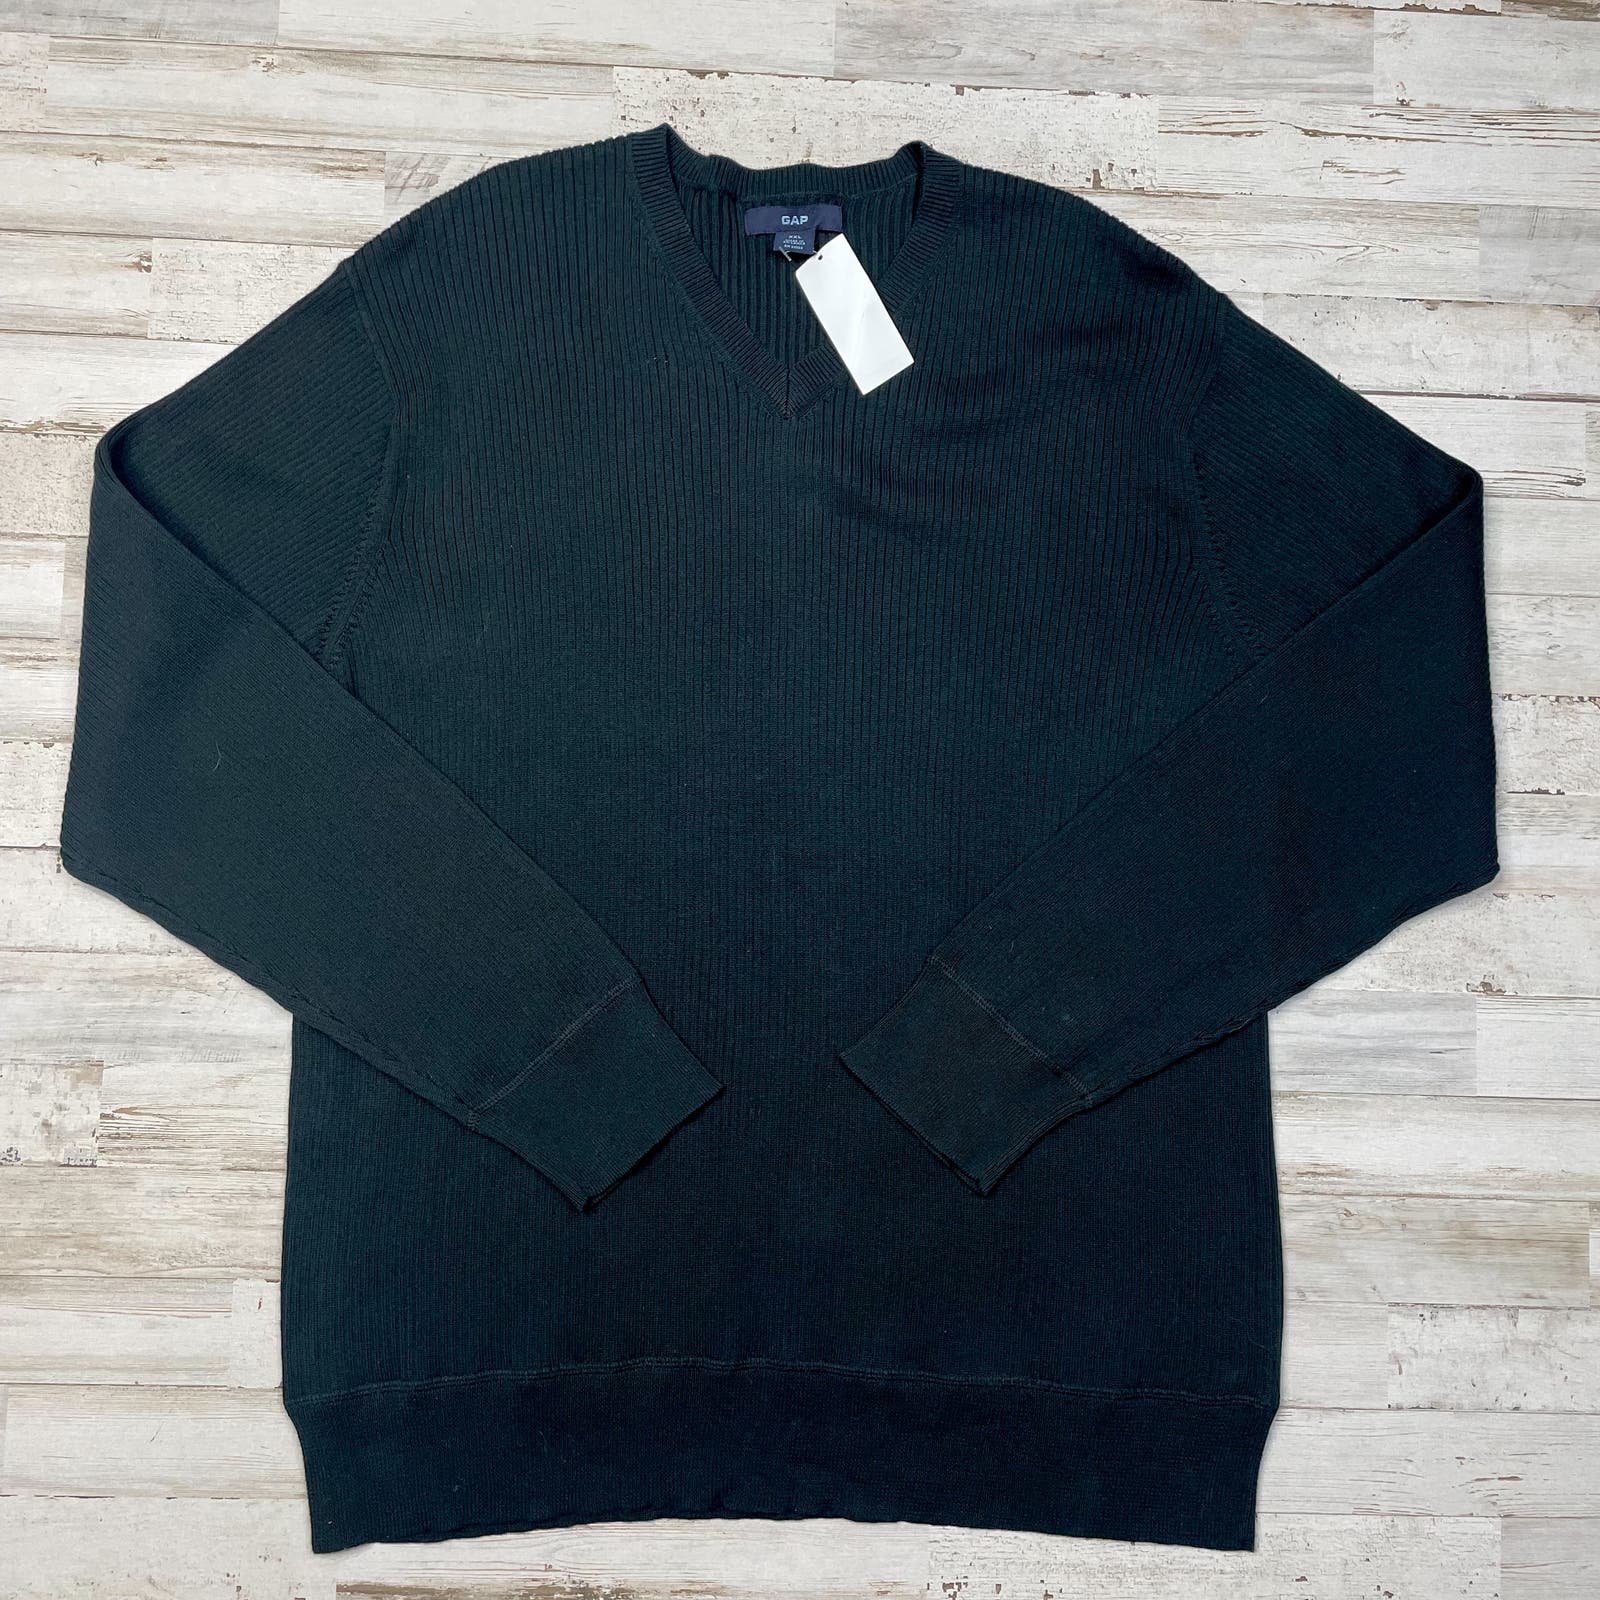 The Best Seller Gap Black 100% Cotton LS V Neck Sweater